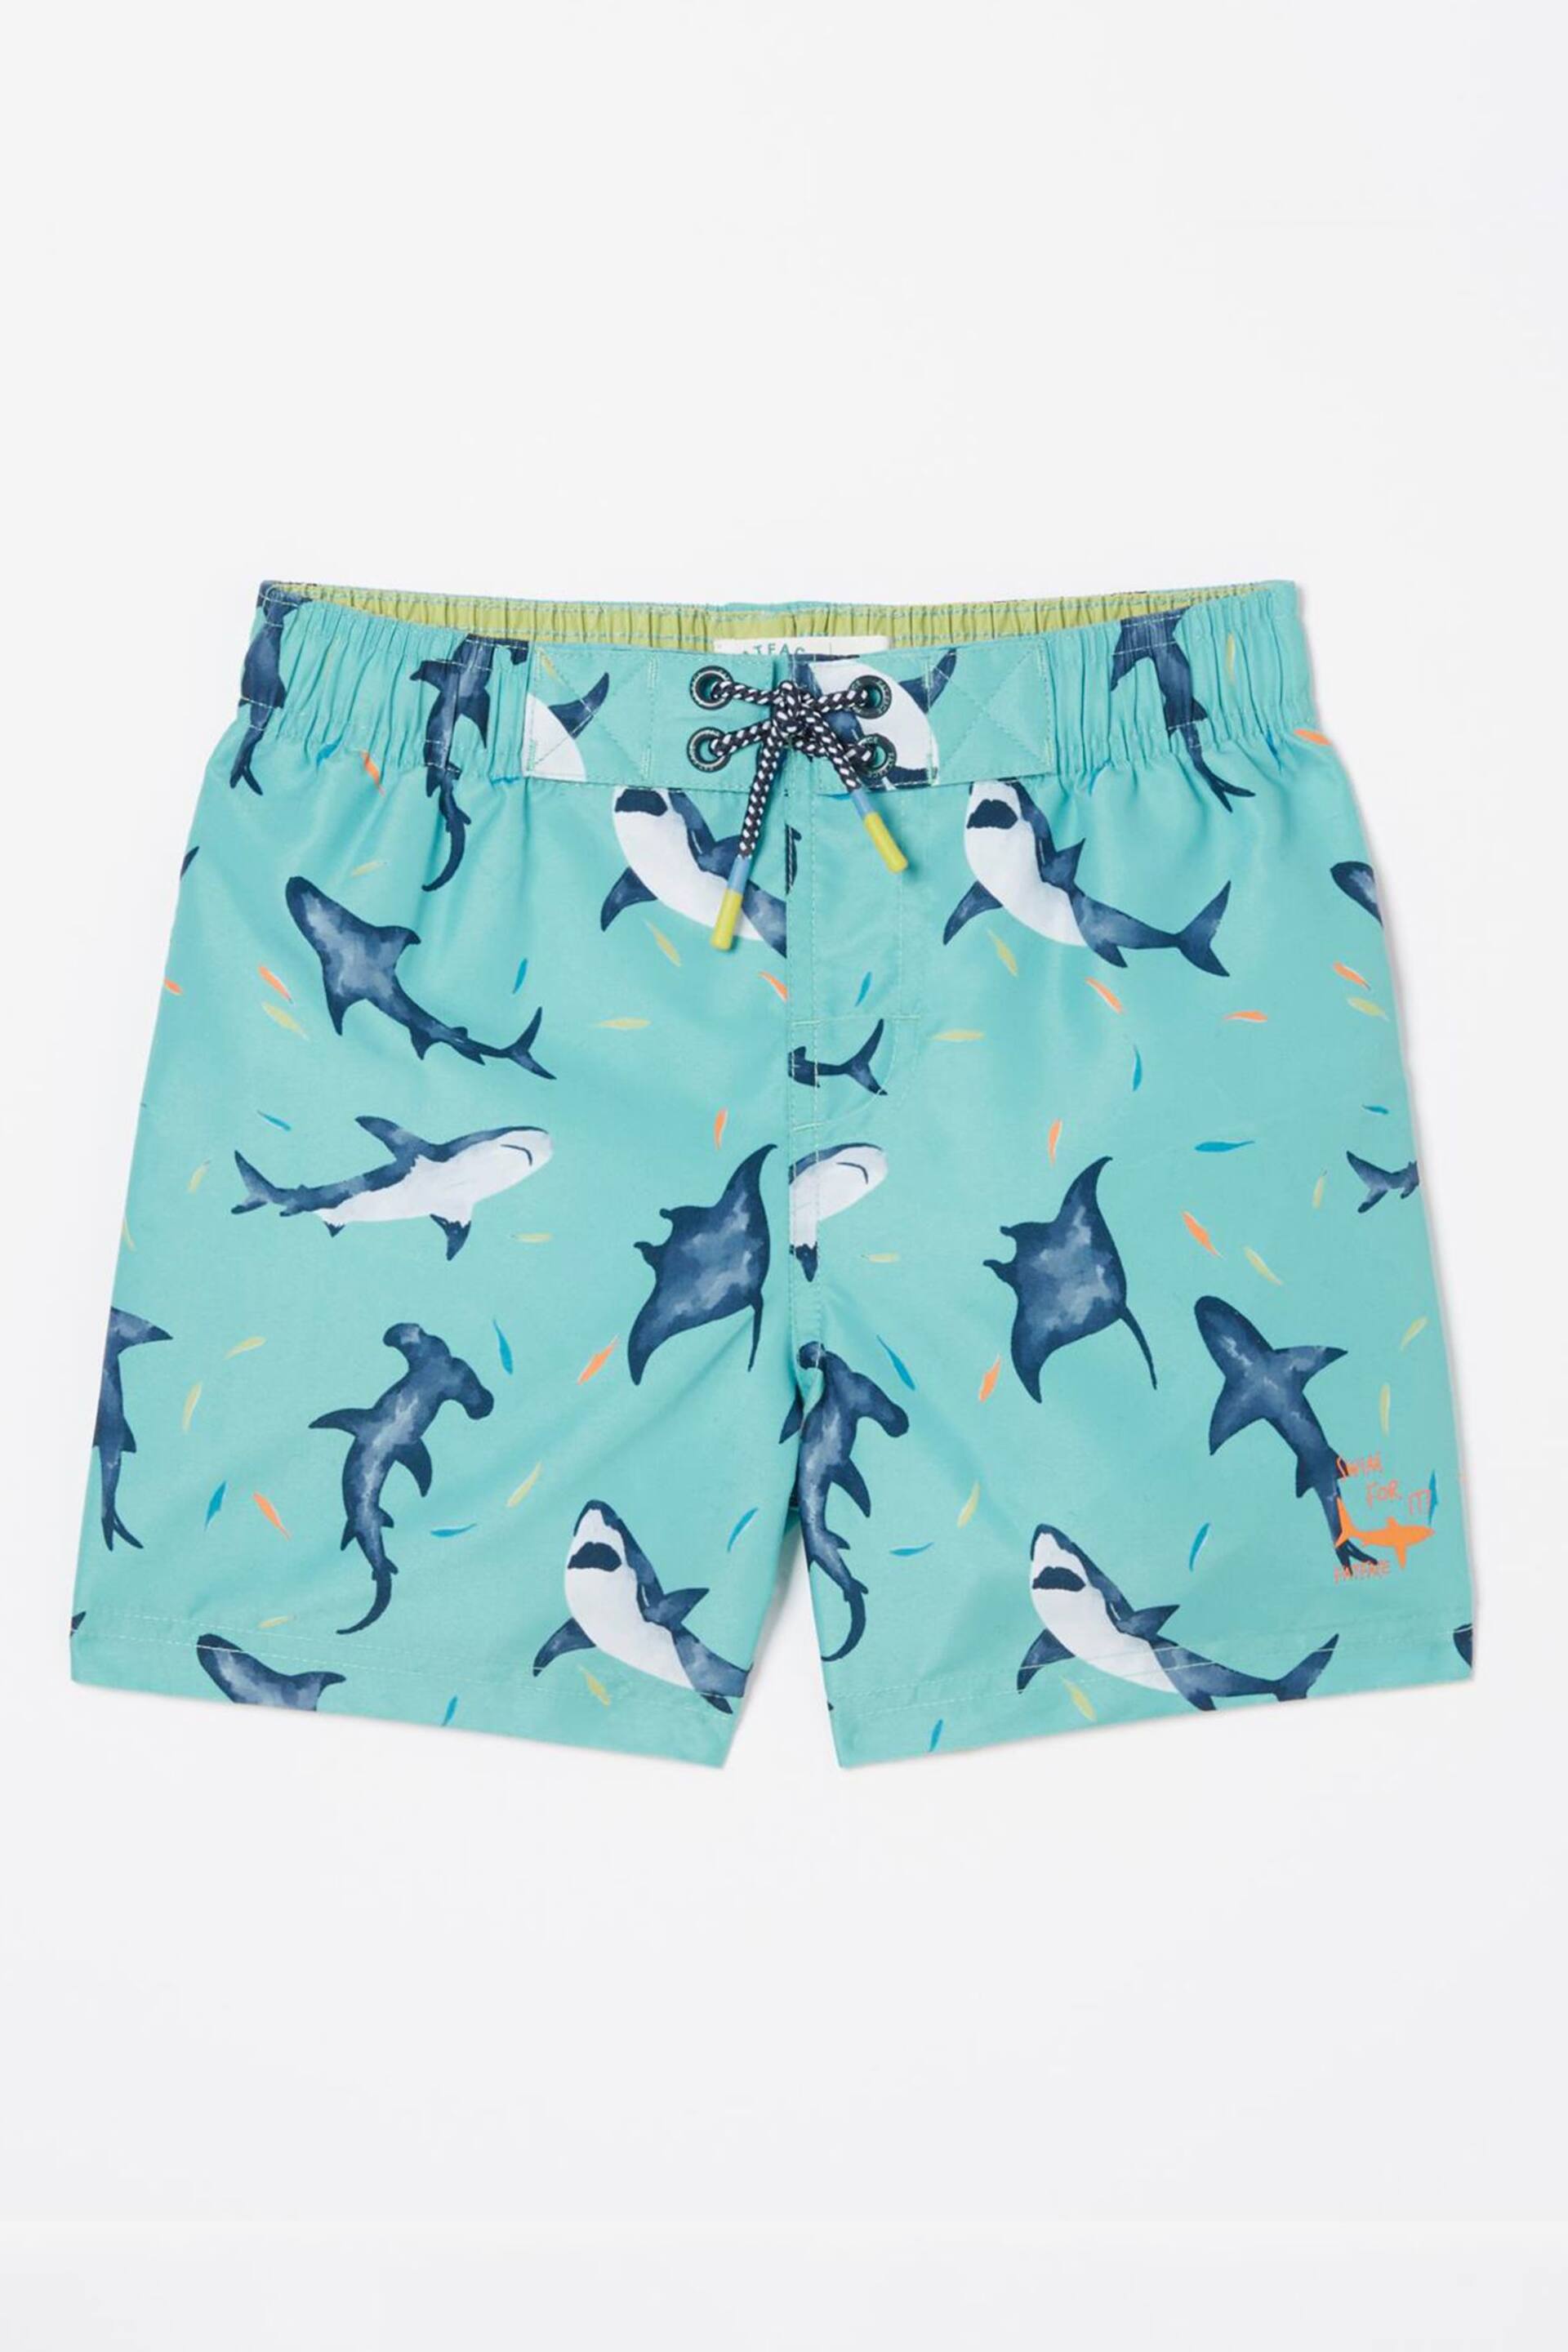 FatFace Blue Shark Swim Shorts - Image 4 of 4